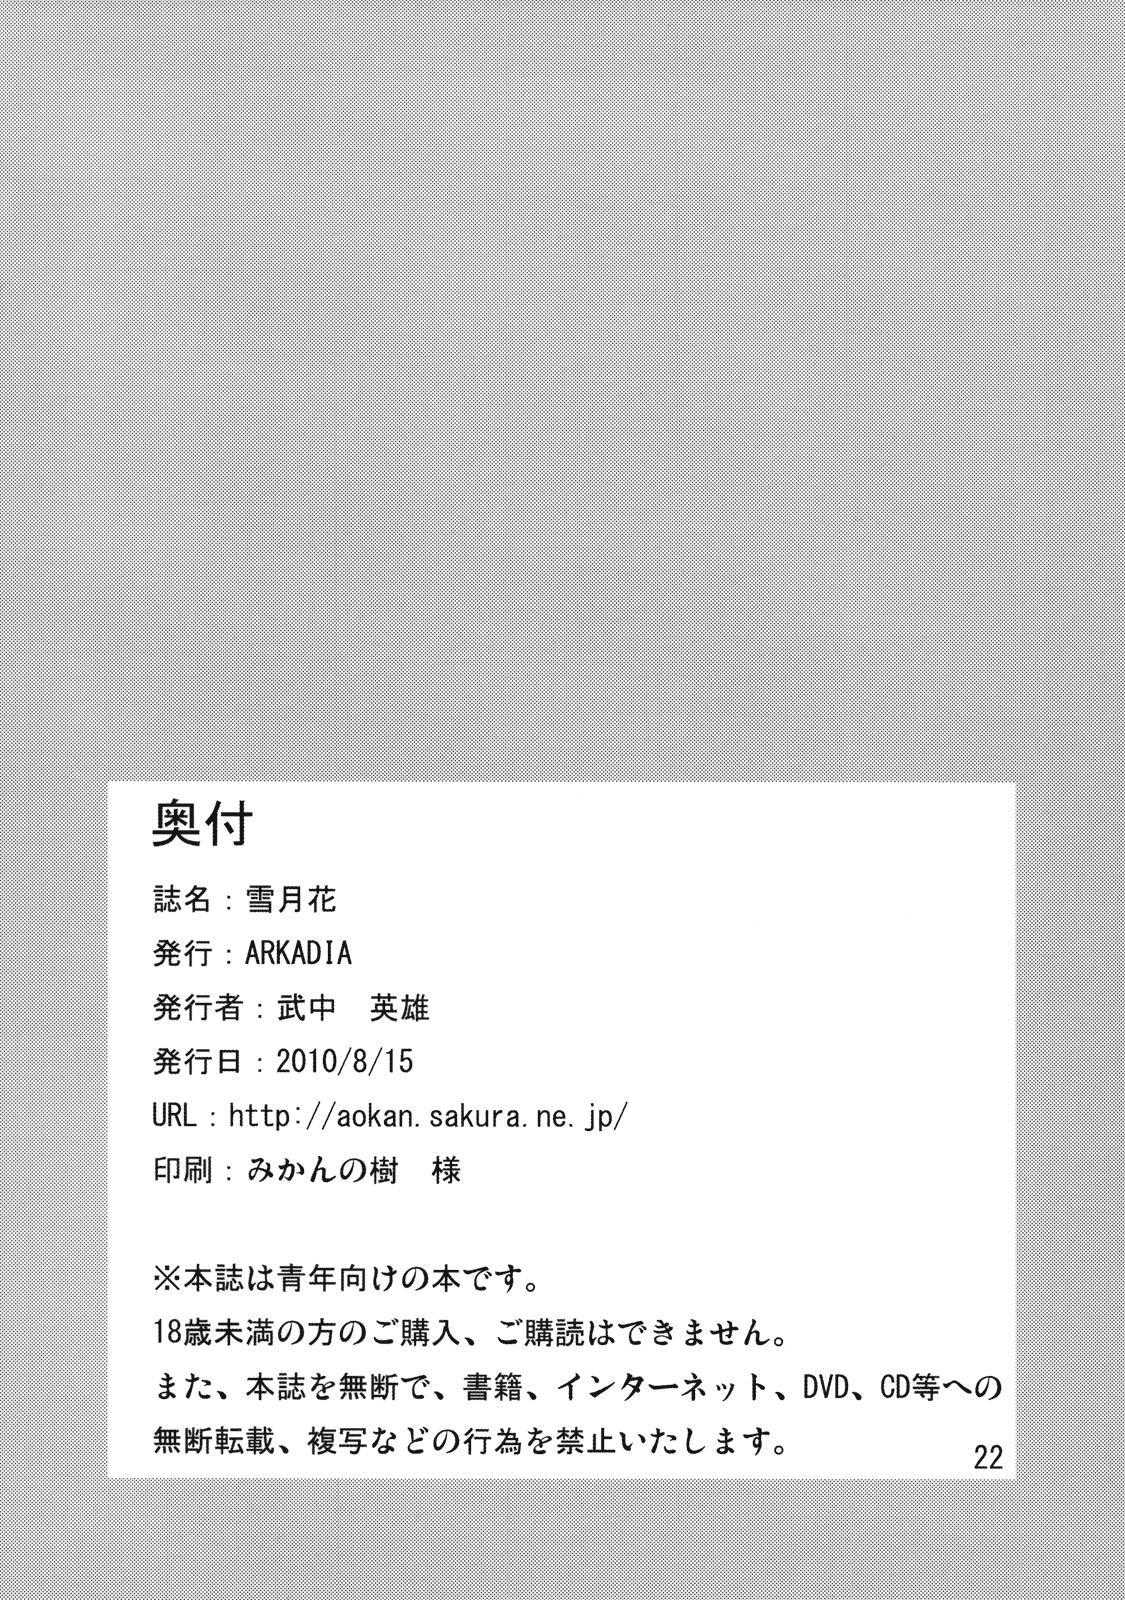 Small Tits Setsugekka - Nurarihyon no mago Couch - Page 22